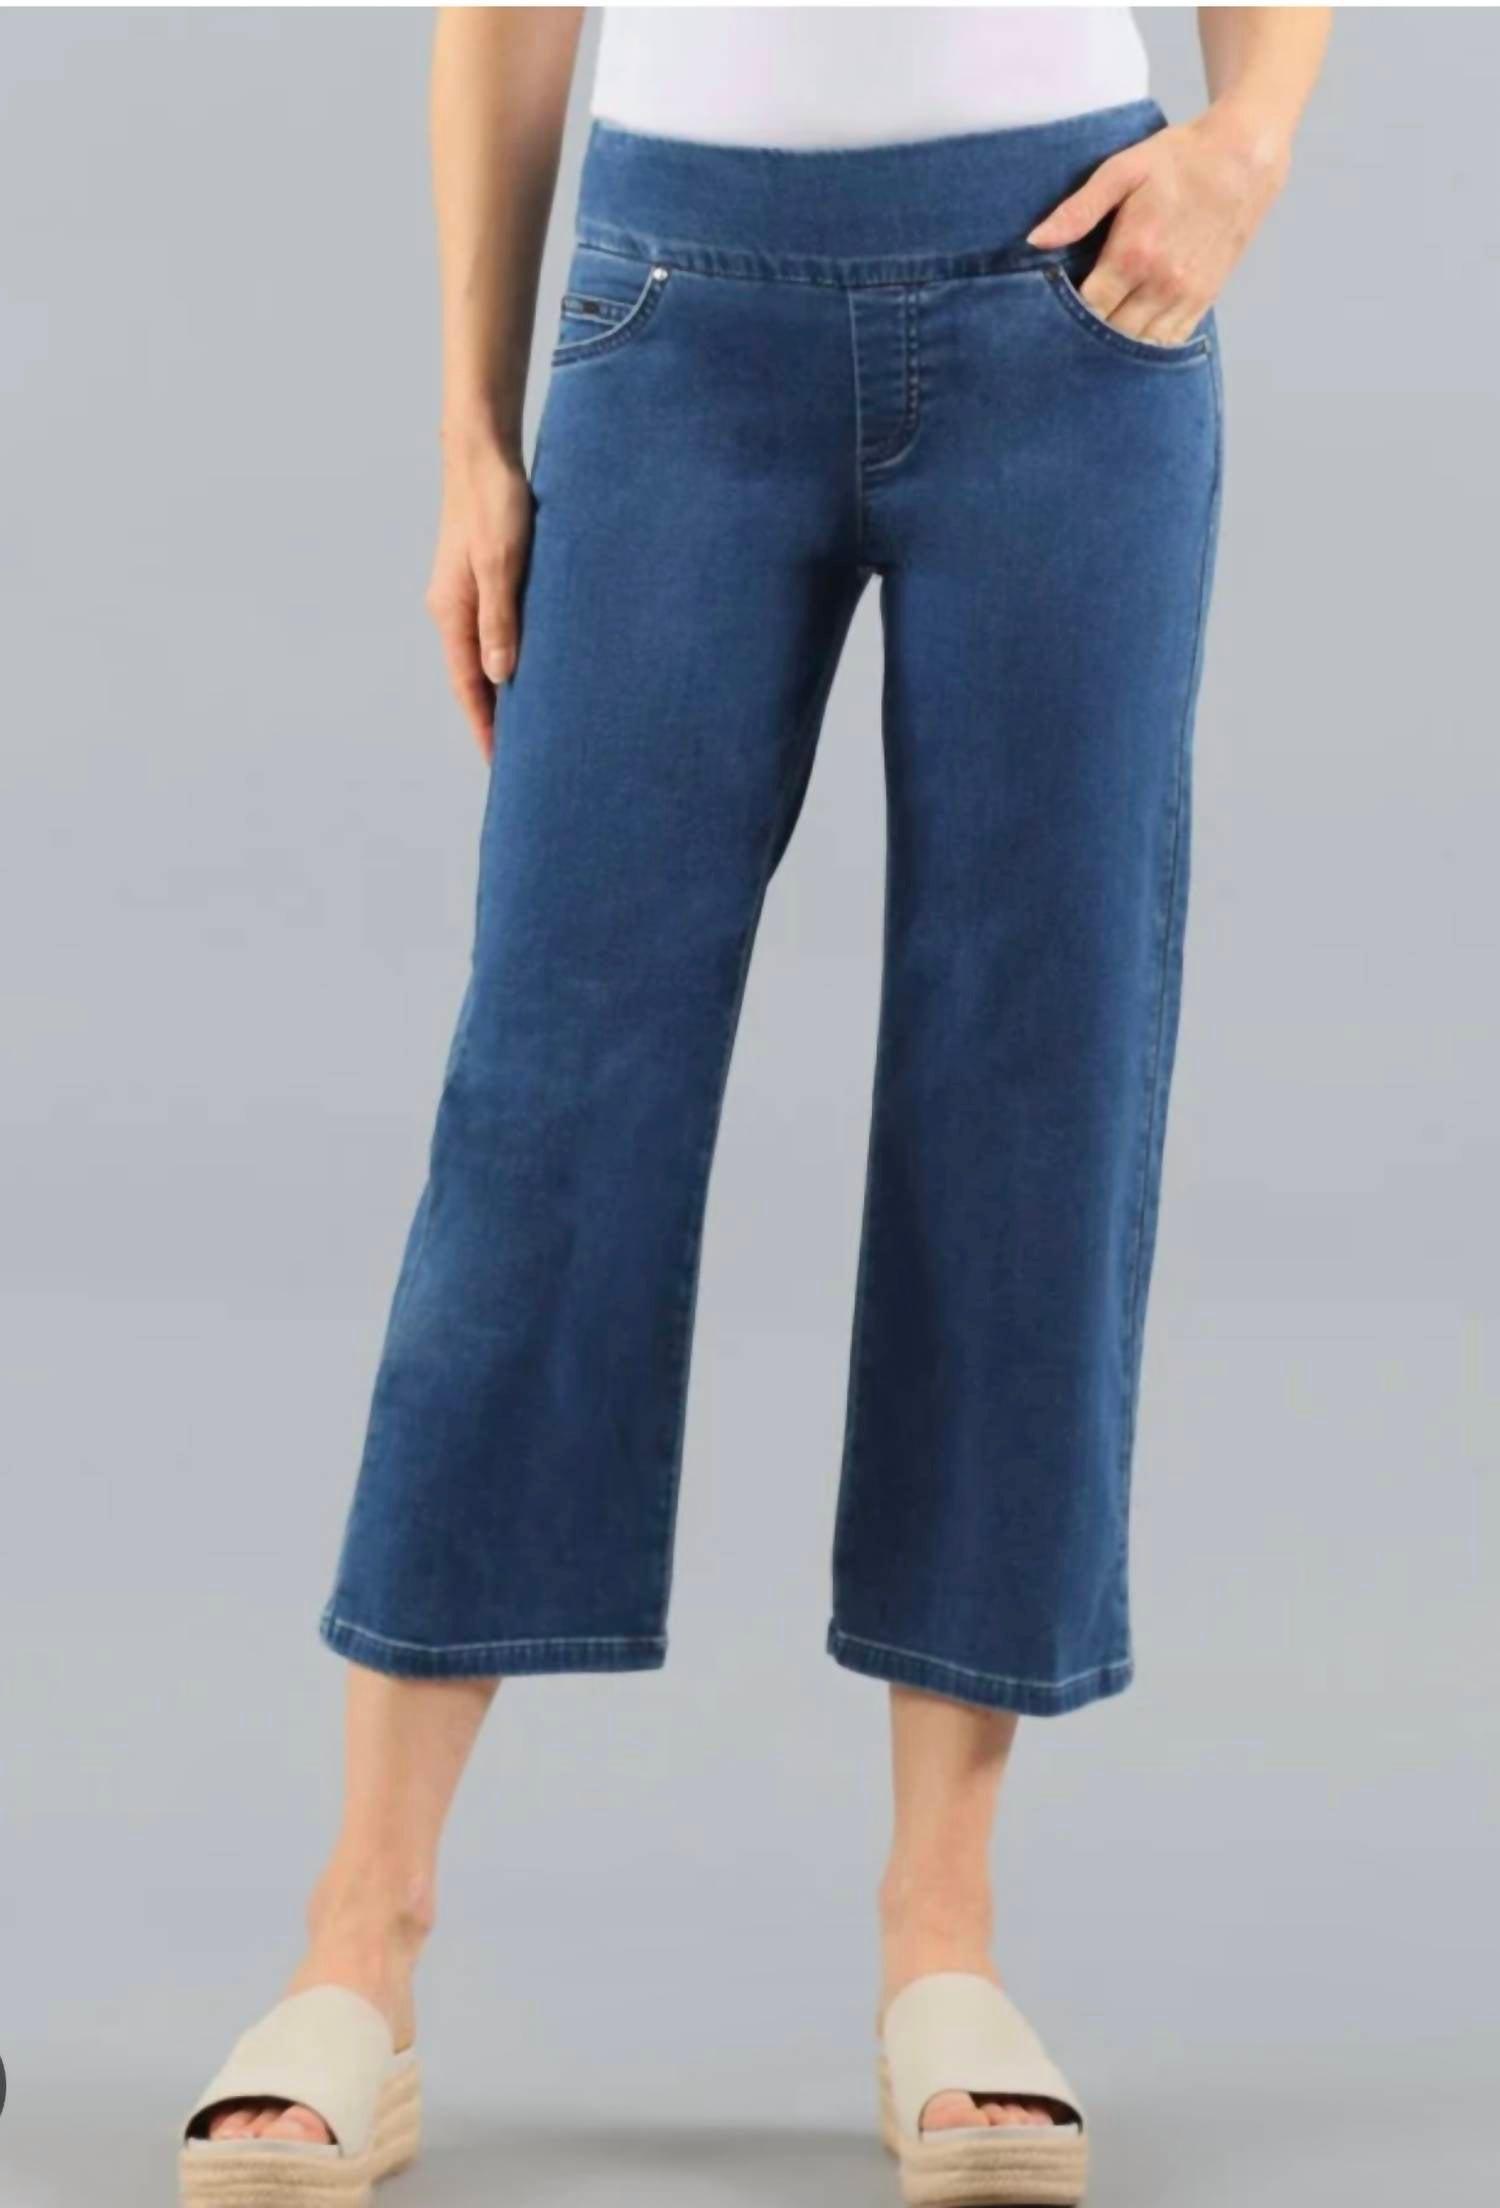 Lisette Jeans in Blue | Lyst